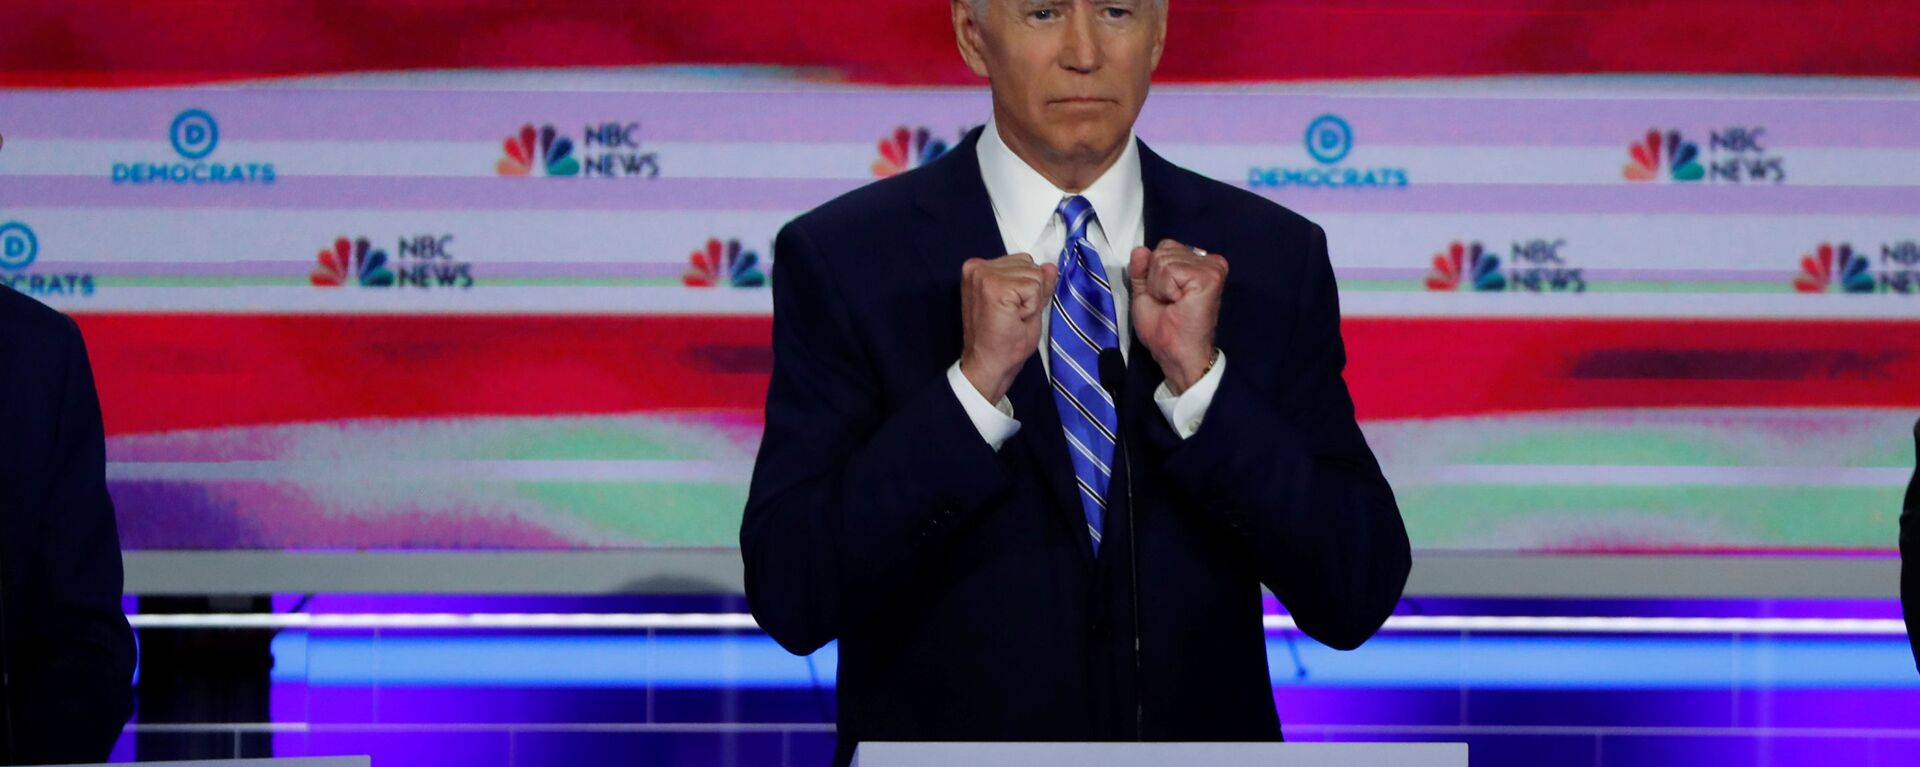 FILE PHOTO: Former Vice President Joe Biden gestures as he speaks during the second night of the first Democratic presidential candidates debate in Miami, Florida, U.S. June 27, 2019 - Sputnik International, 1920, 15.09.2020